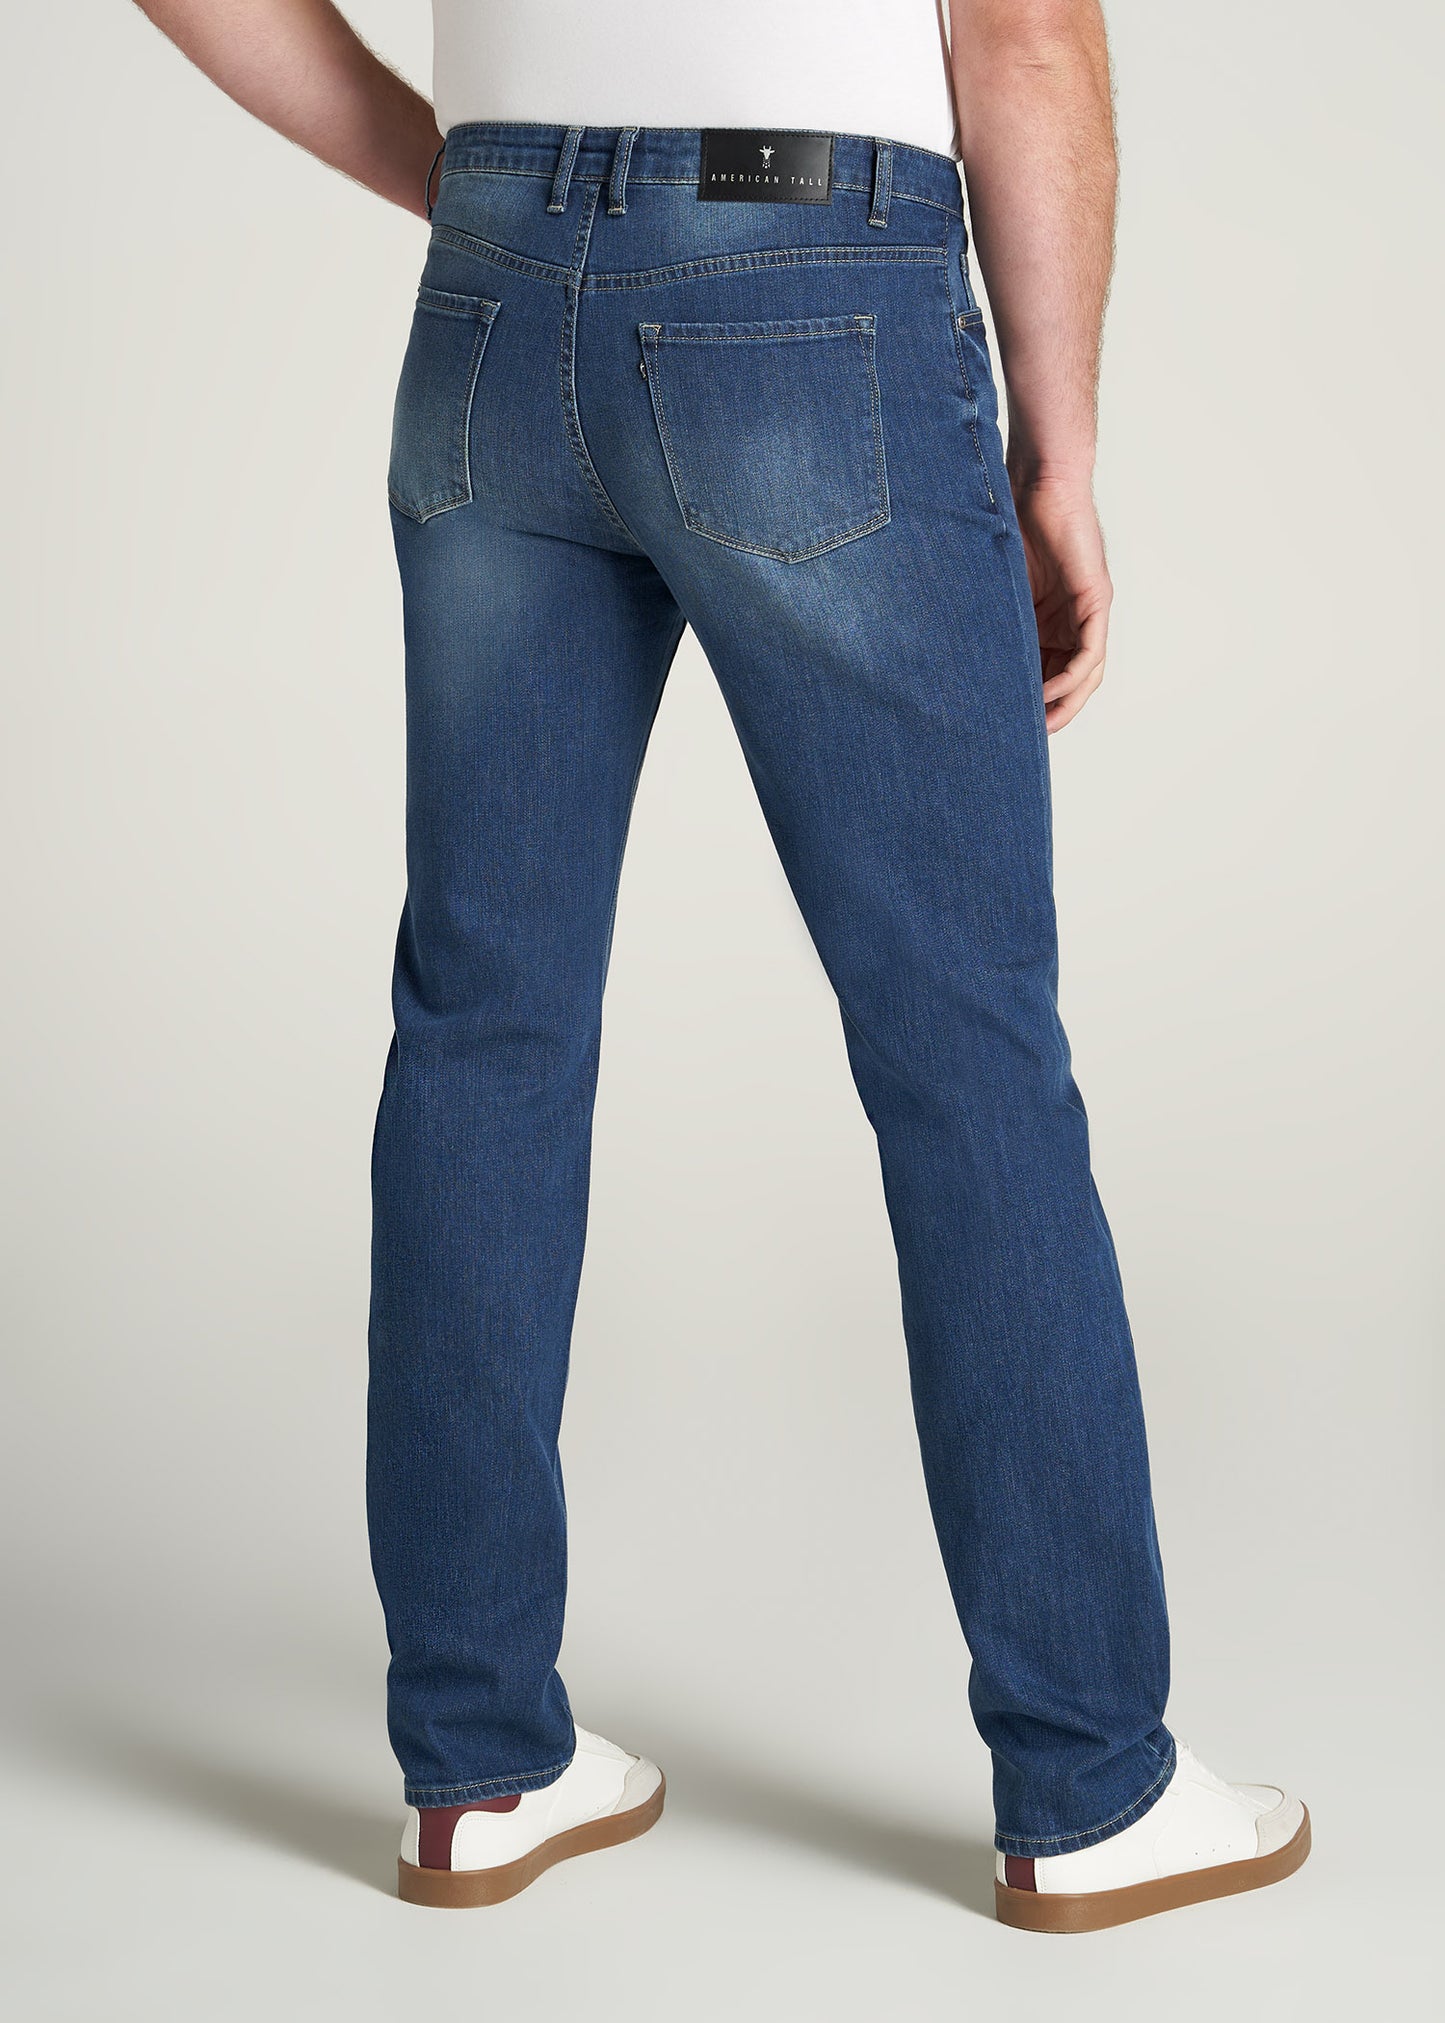         American-Tall-Men-J1-StraightLeg-Jeans-ClassicBlue-back